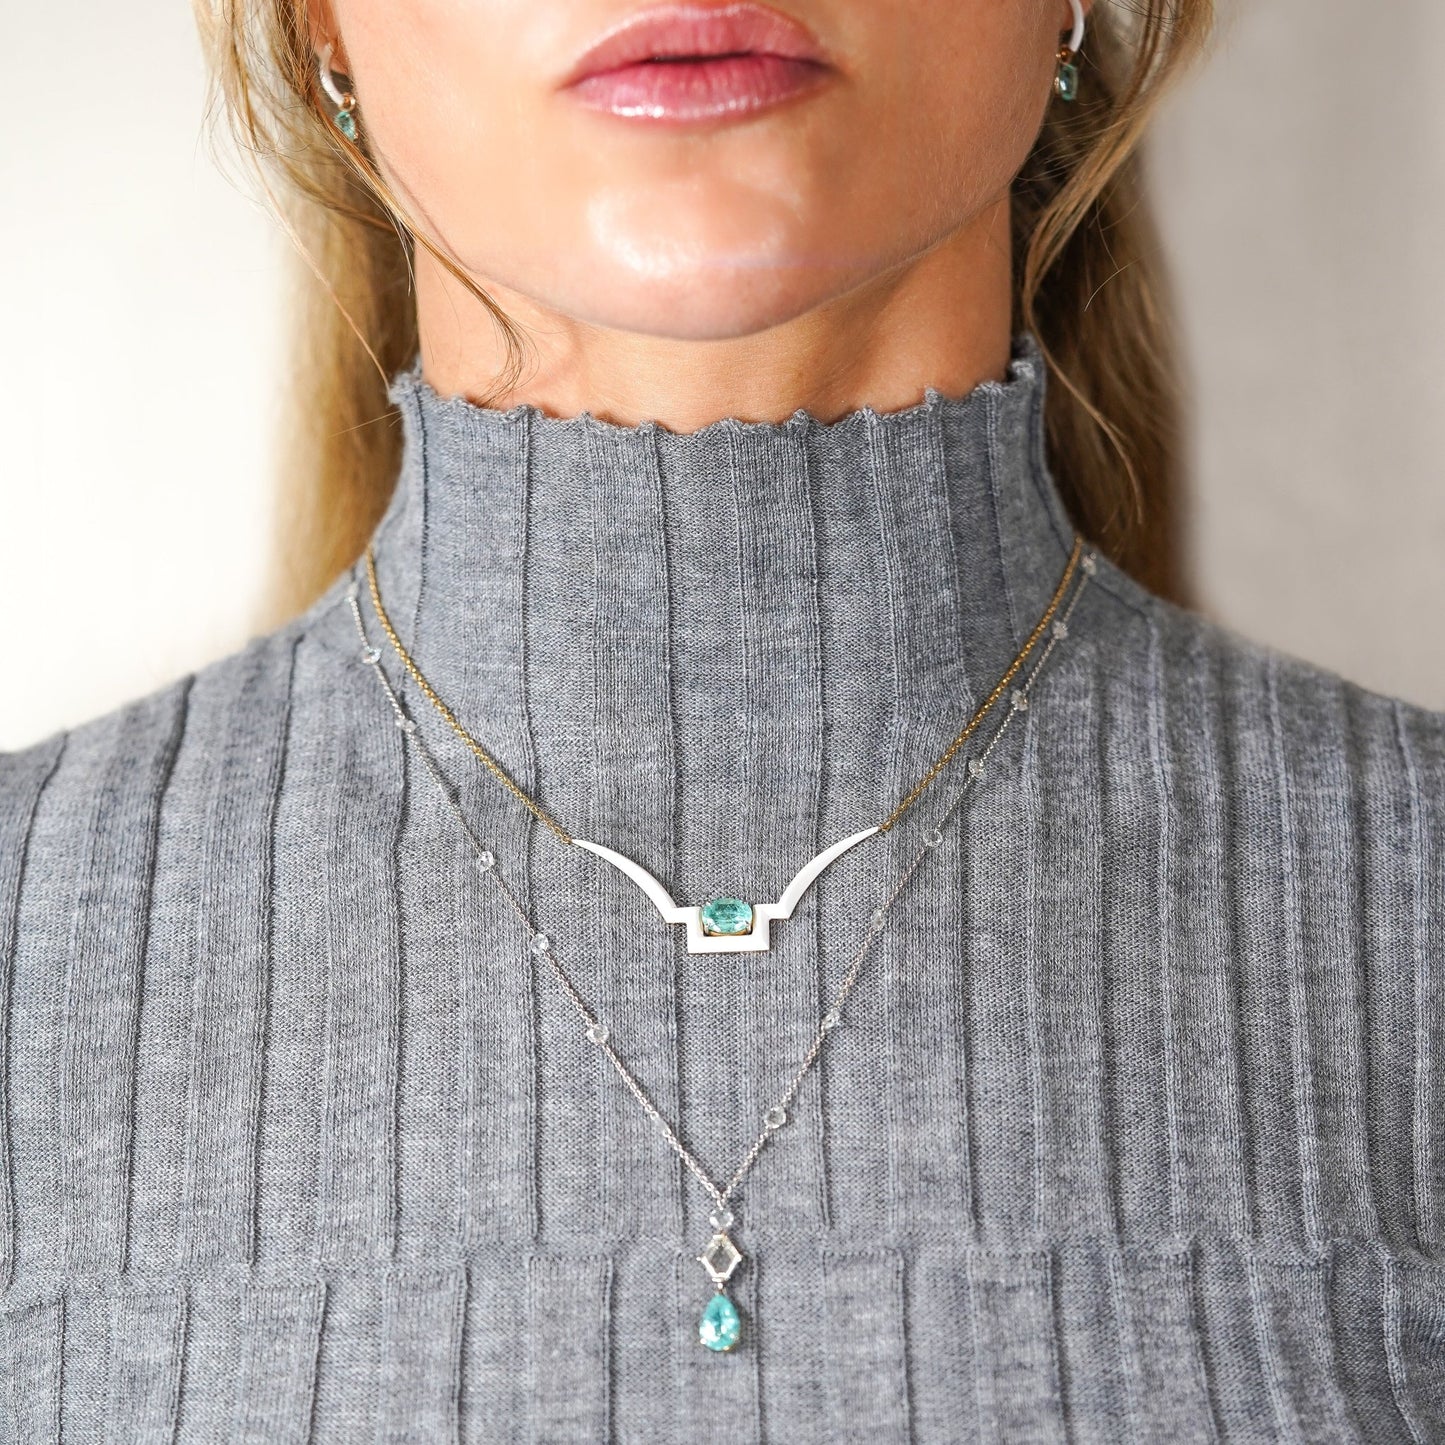 Taura necklace with 1.50 ct. oval paraiba tourmaline - Ines Nieto London